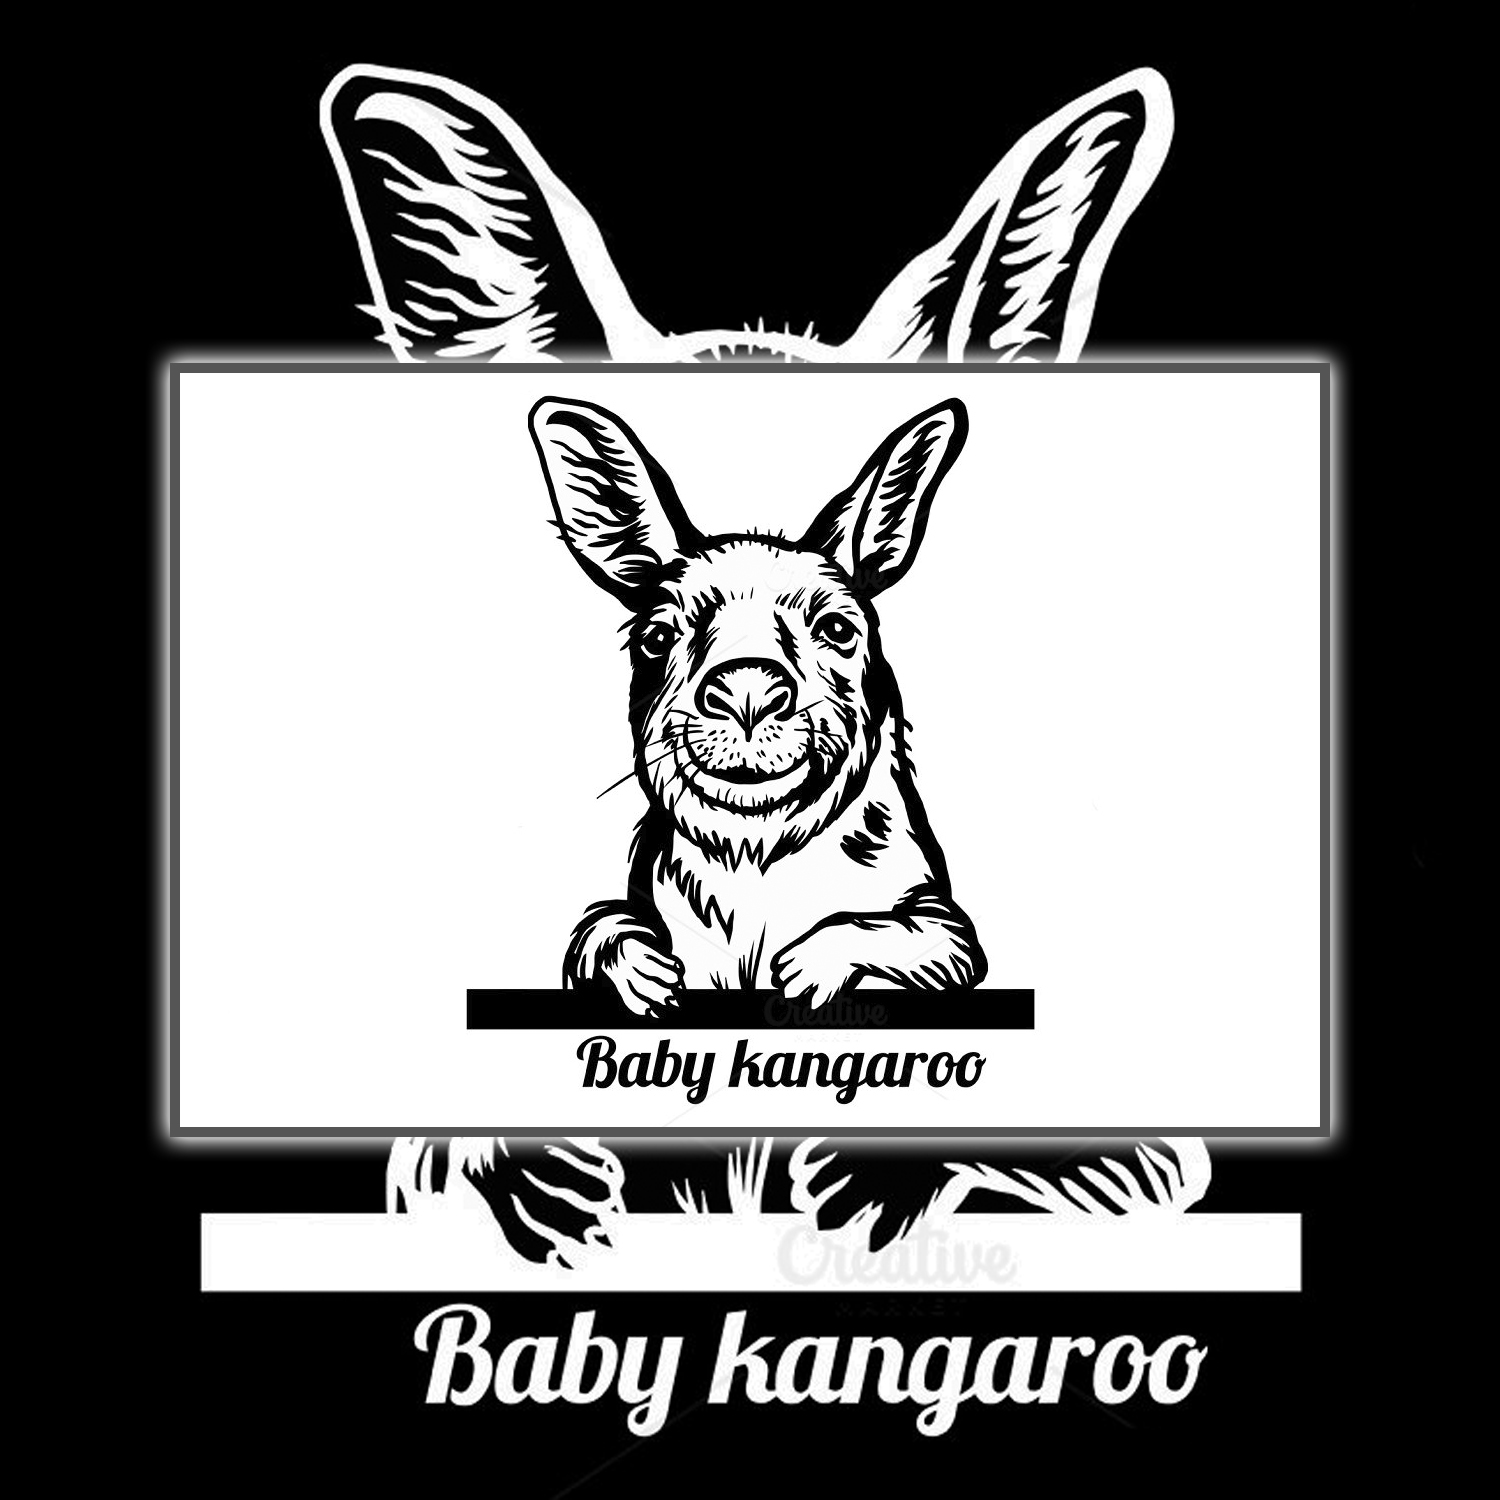 Baby Kangaroo Animal Face Vector cover image.